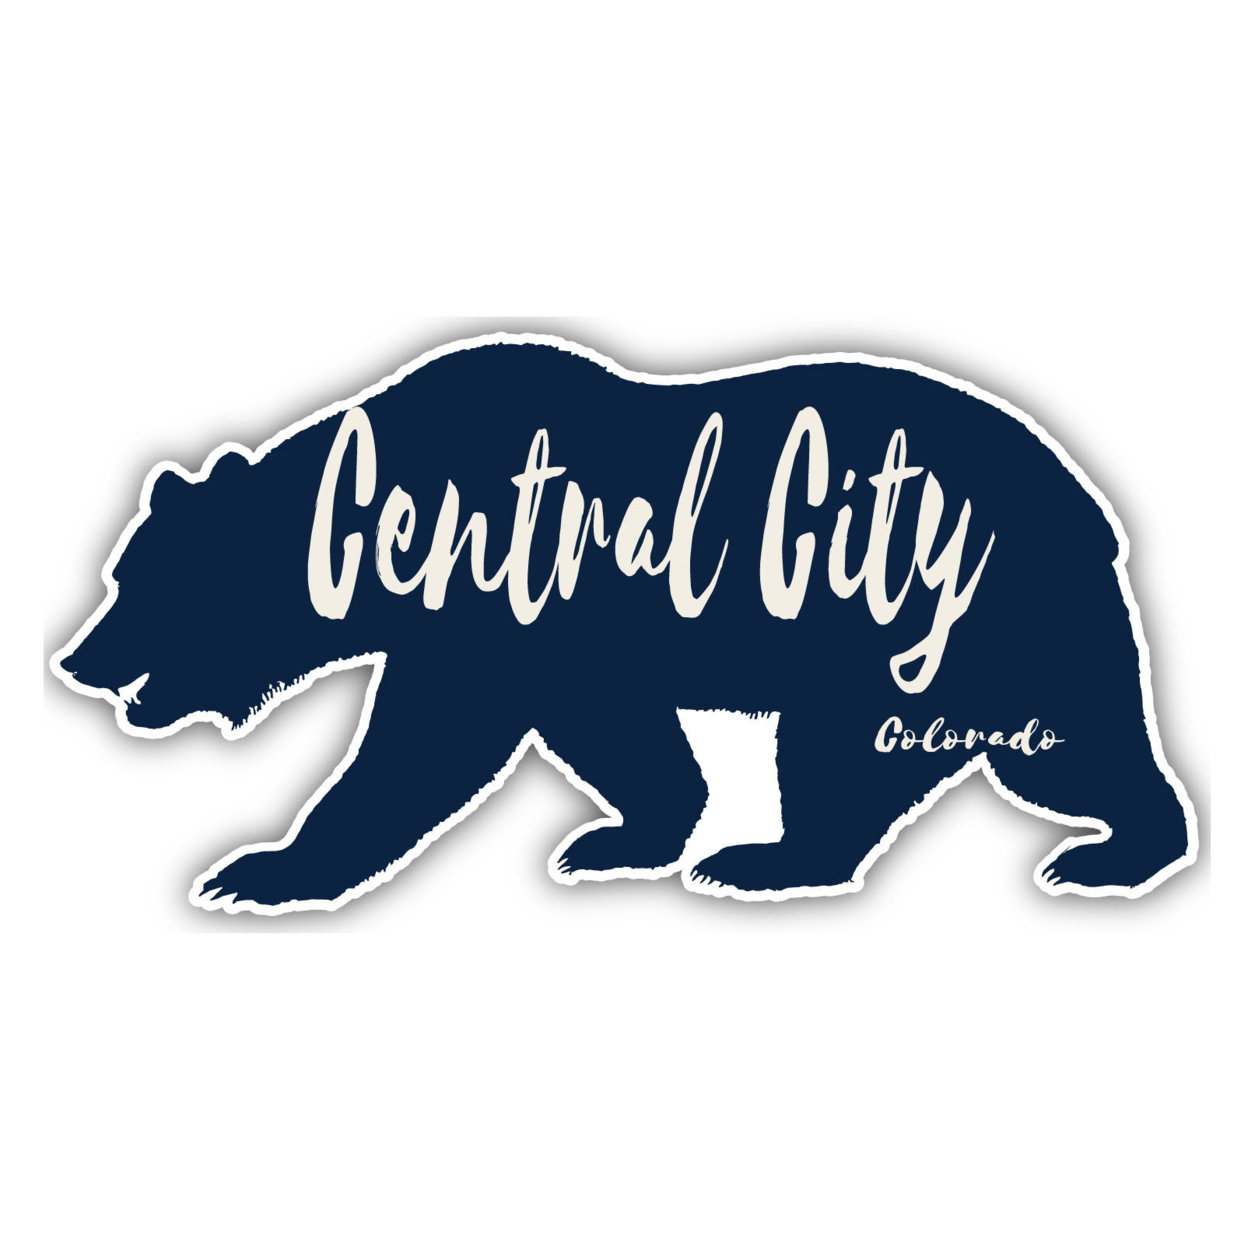 Central City Colorado Souvenir Decorative Stickers (Choose Theme And Size) - Single Unit, 6-Inch, Bear